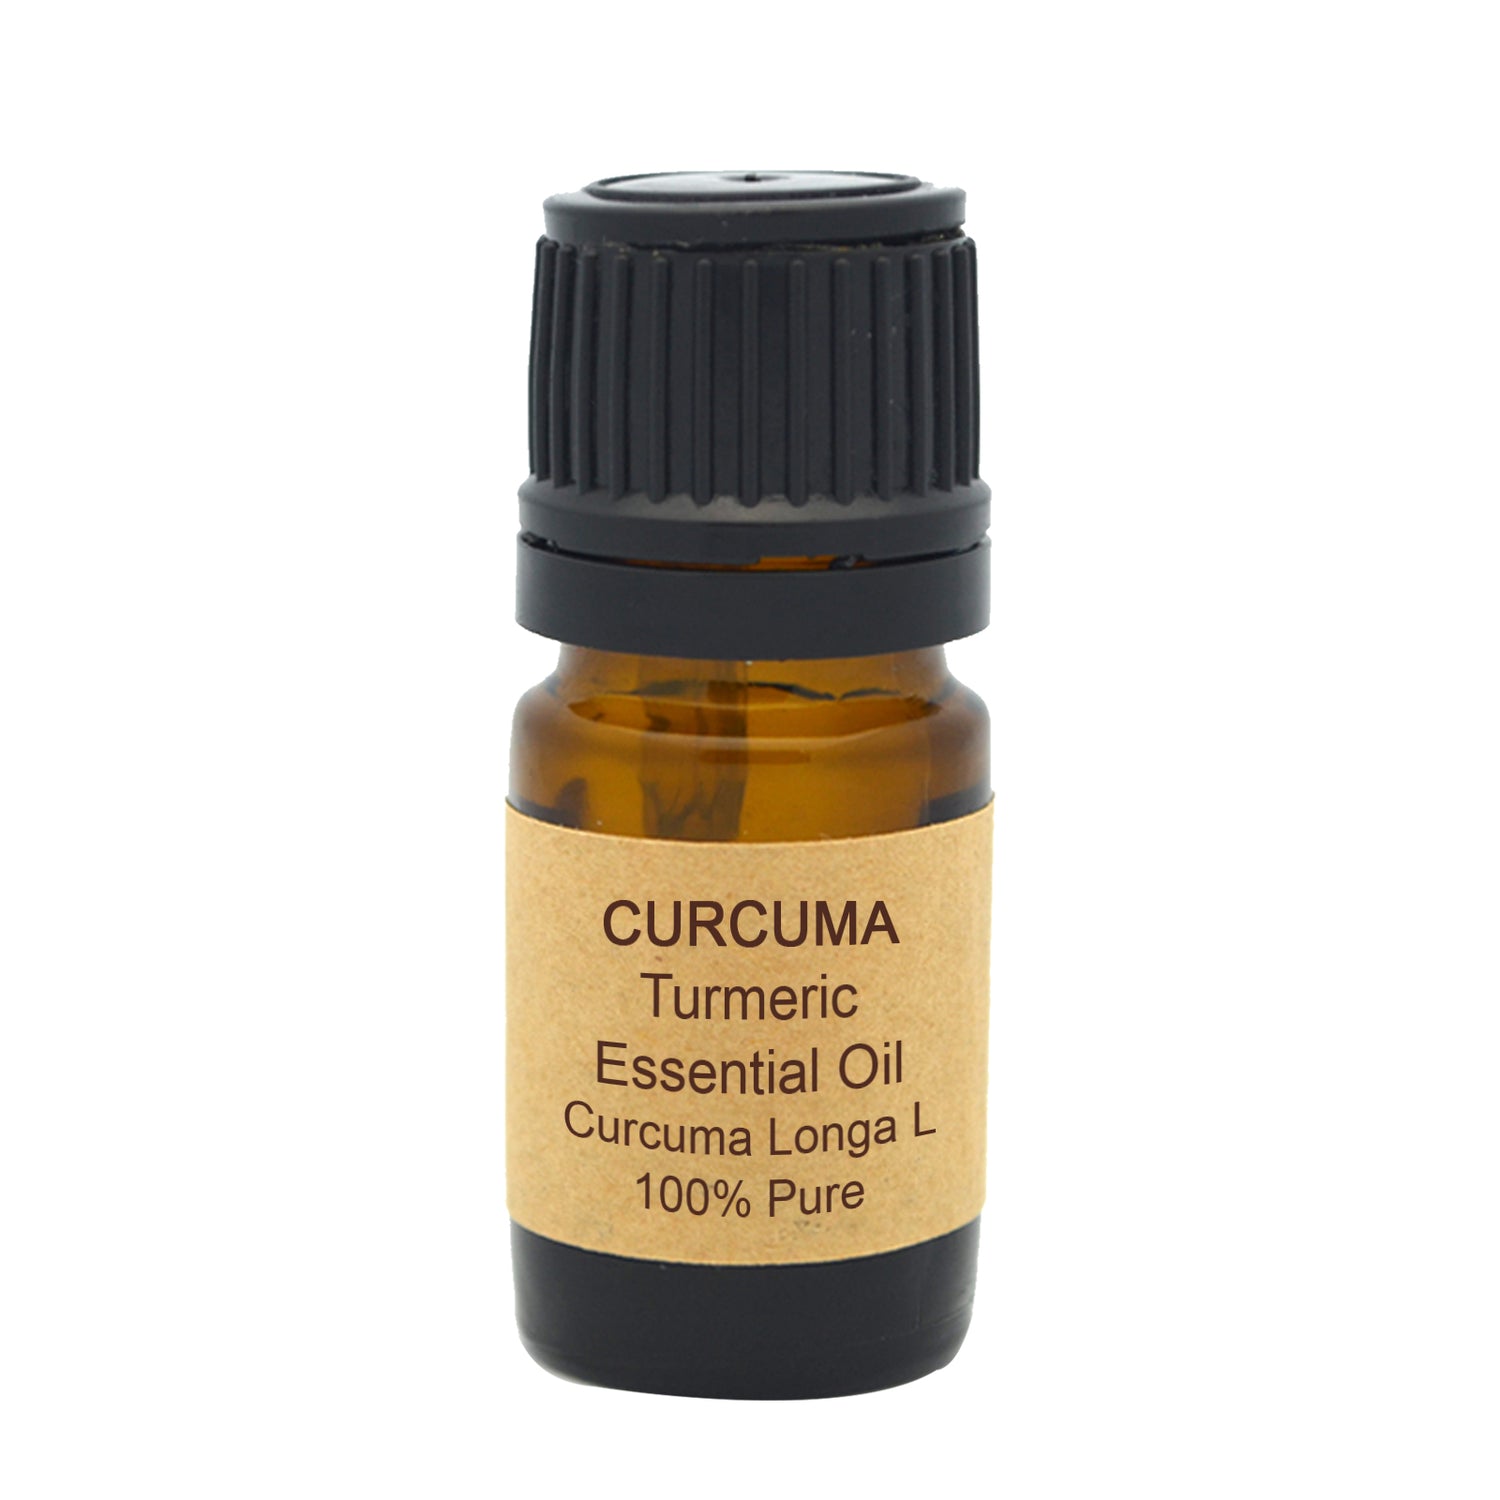 Curcuma Turmeric Essential Oil